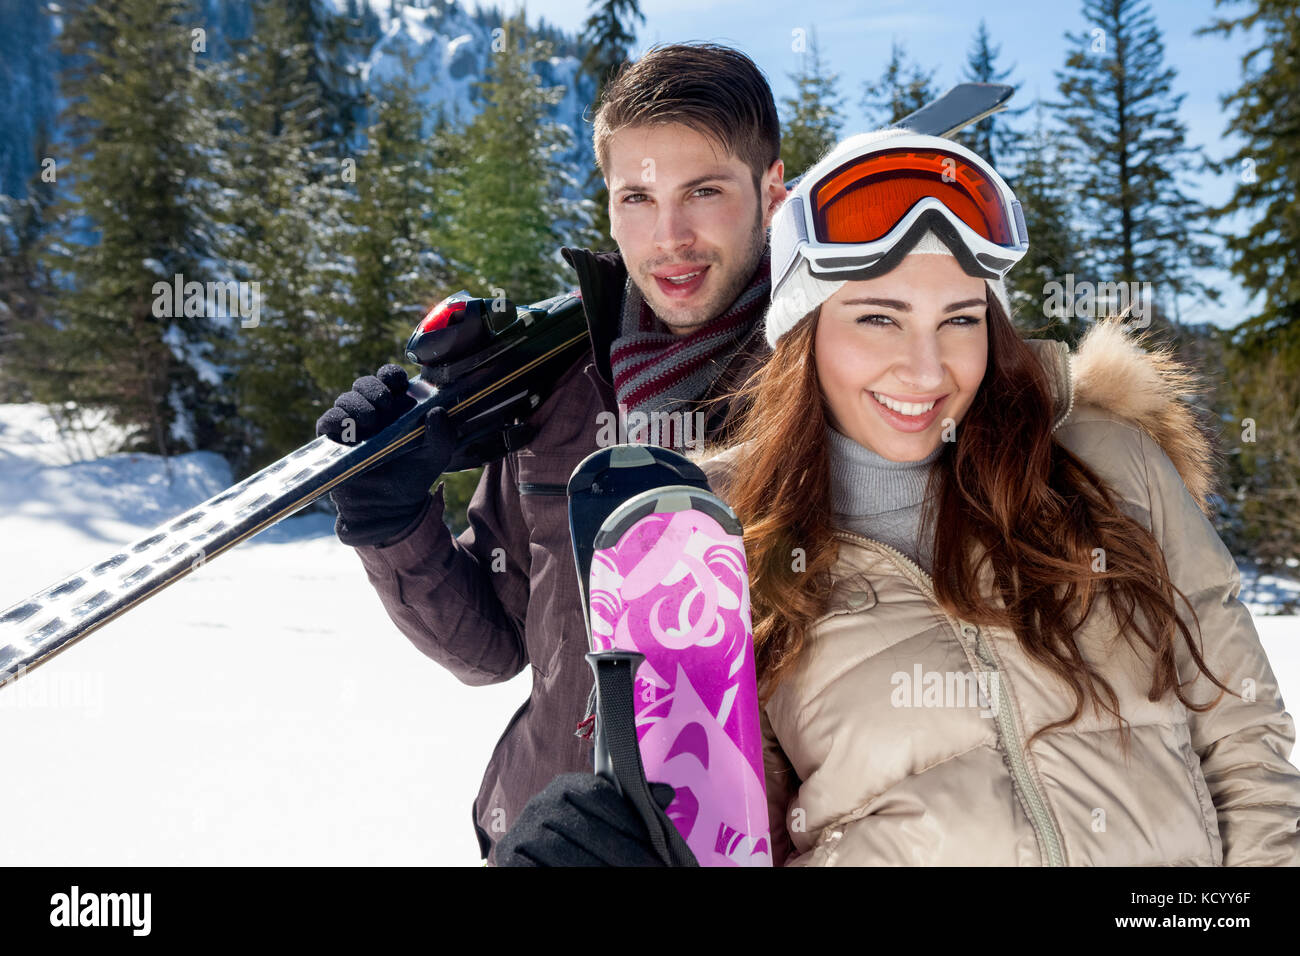 Portrait of happy couple with skis Stock Photo